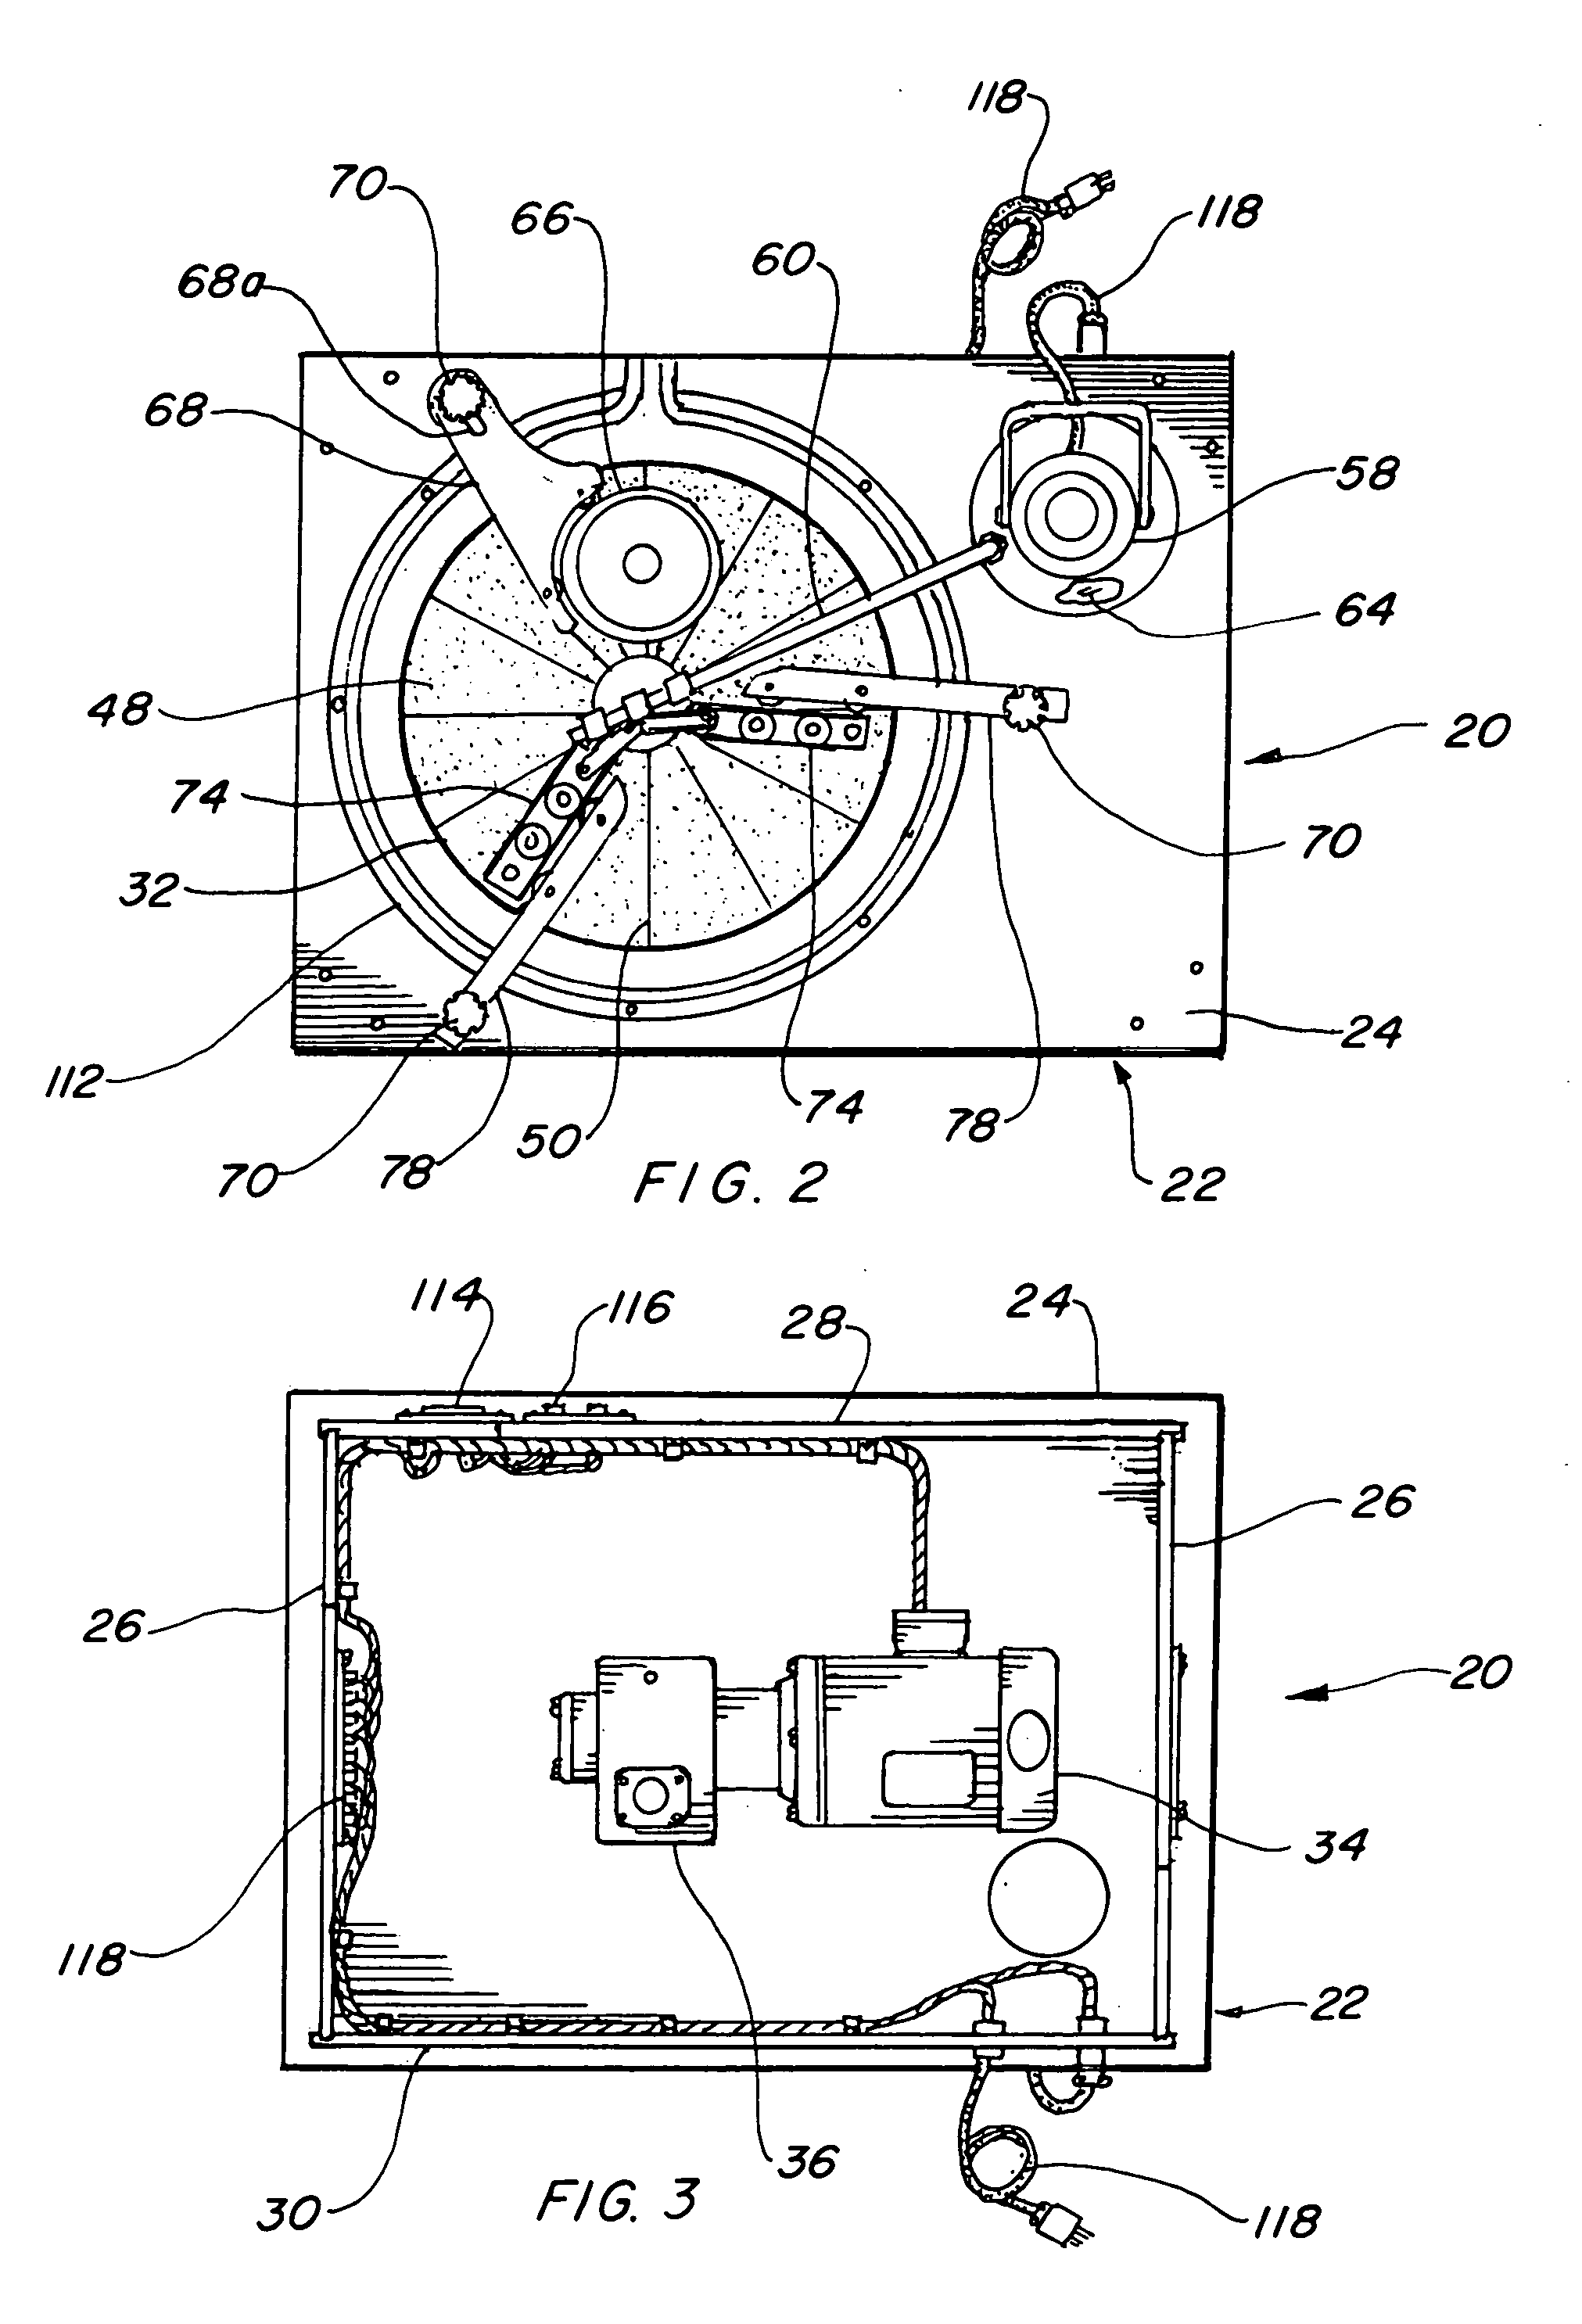 Reciprocal blade lapping machine